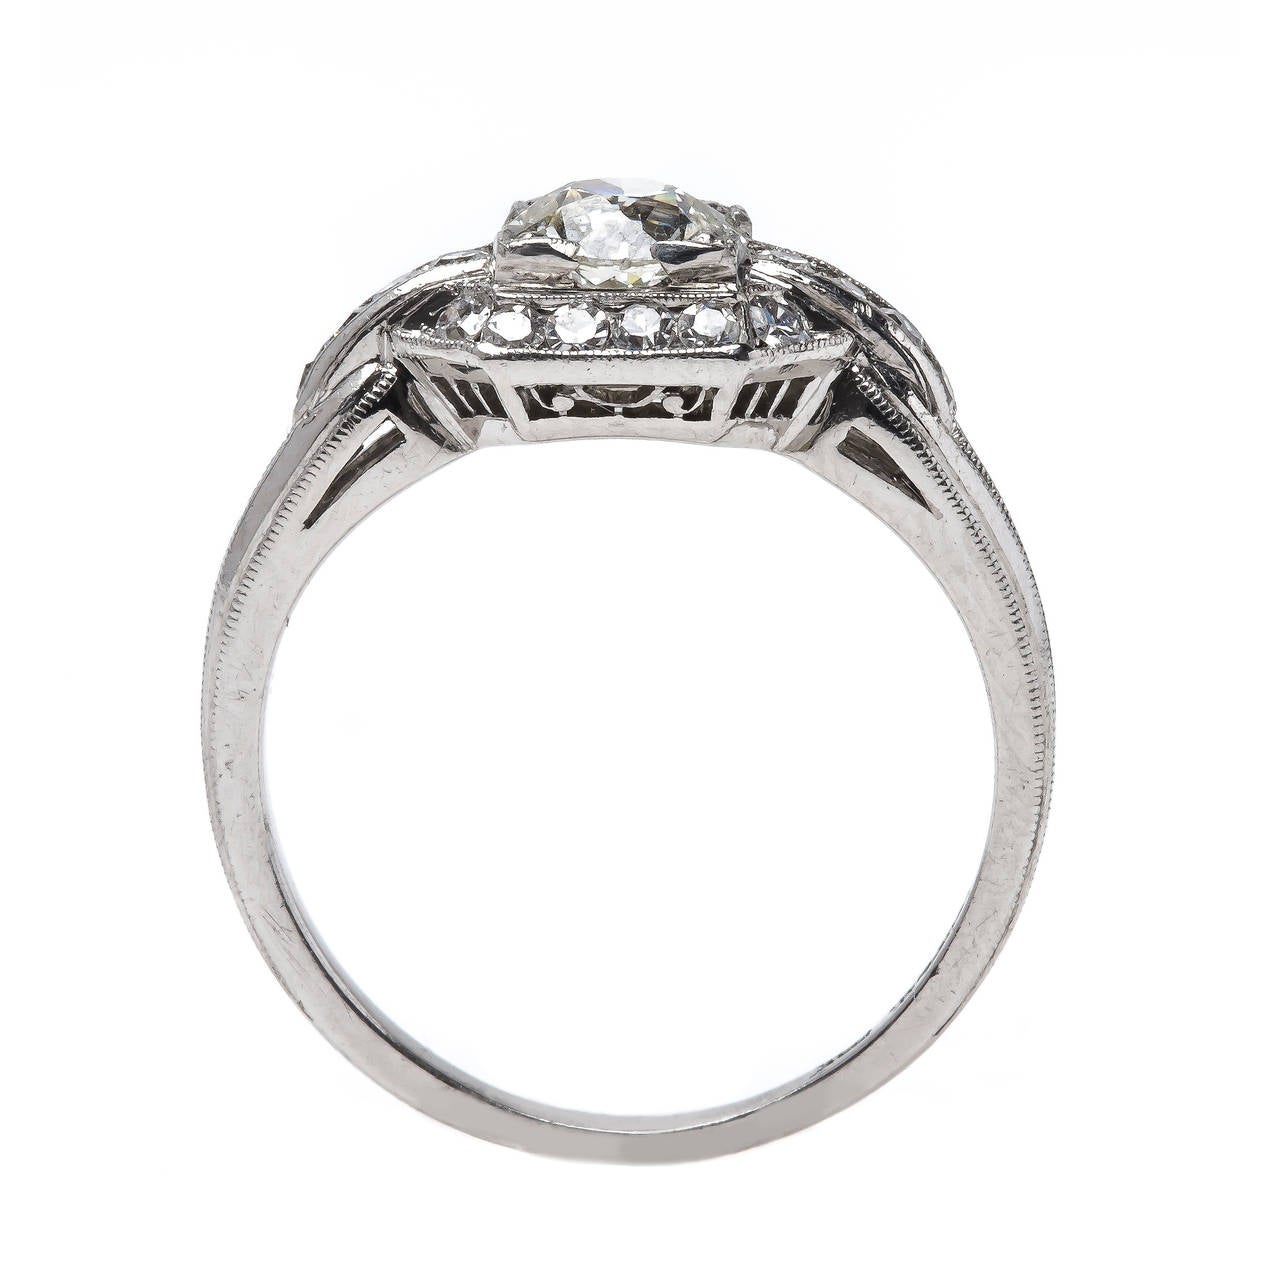 Women's Art Deco Era Platinum Ring with Old European Cut Diamond Center and Diamond Halo